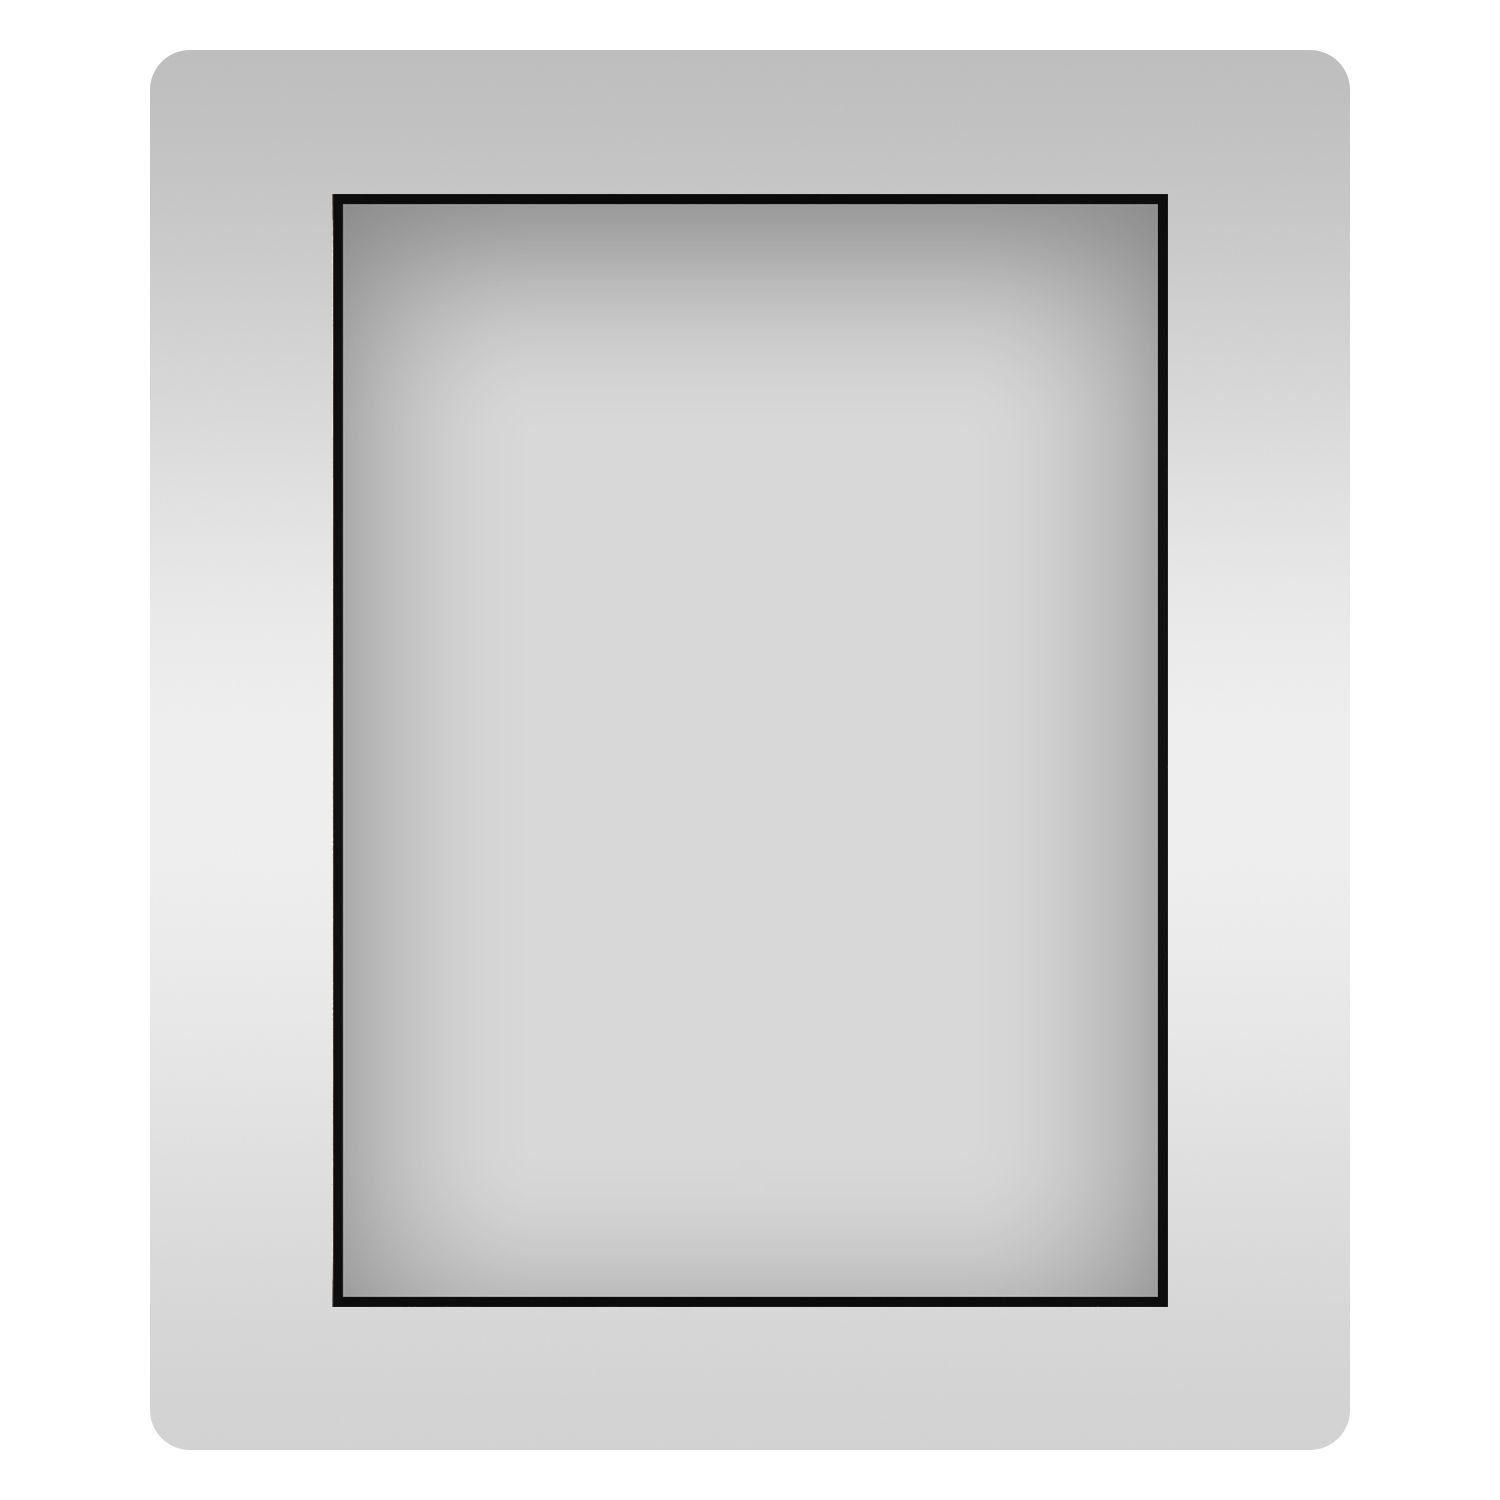 Влагостойкое прямоугольное зеркало Wellsee 7 Rays' Spectrum 172200760, 80х120 см зеркало с фацетом 15 мм 80х120 см evoform